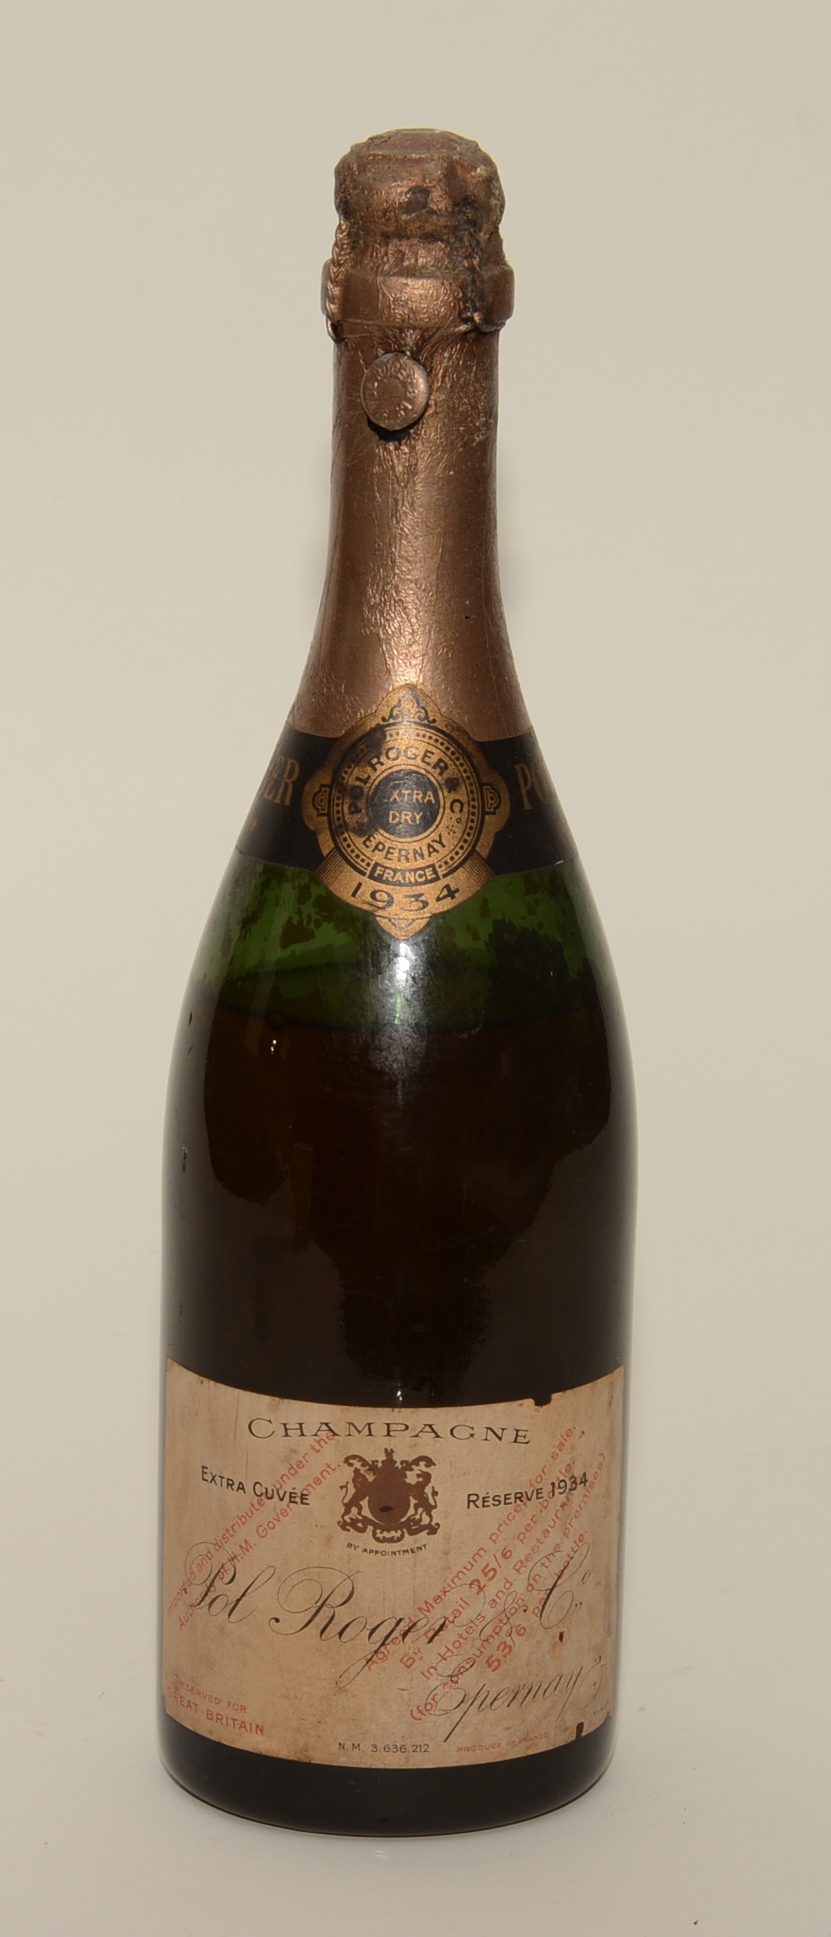 A bottle of Pol Roger & Co 1934 champagne